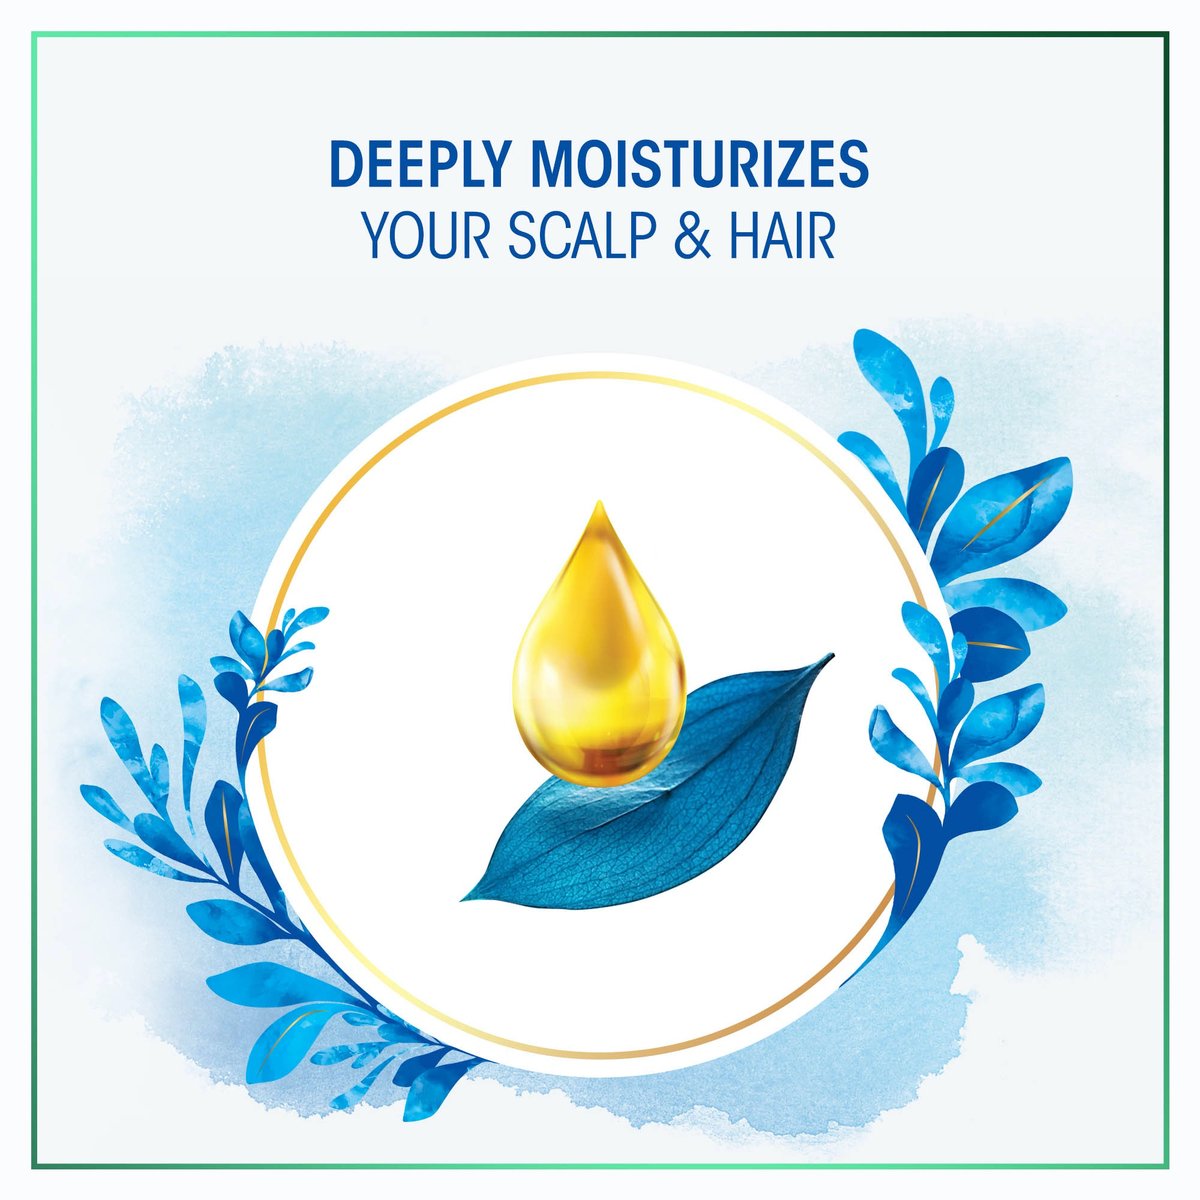 Head & Shoulders Supreme Anti-Dandruff Shampoo with Argan Oil and Aloe Vera for Sensitive Scalp Soothing 400ml + 200ml